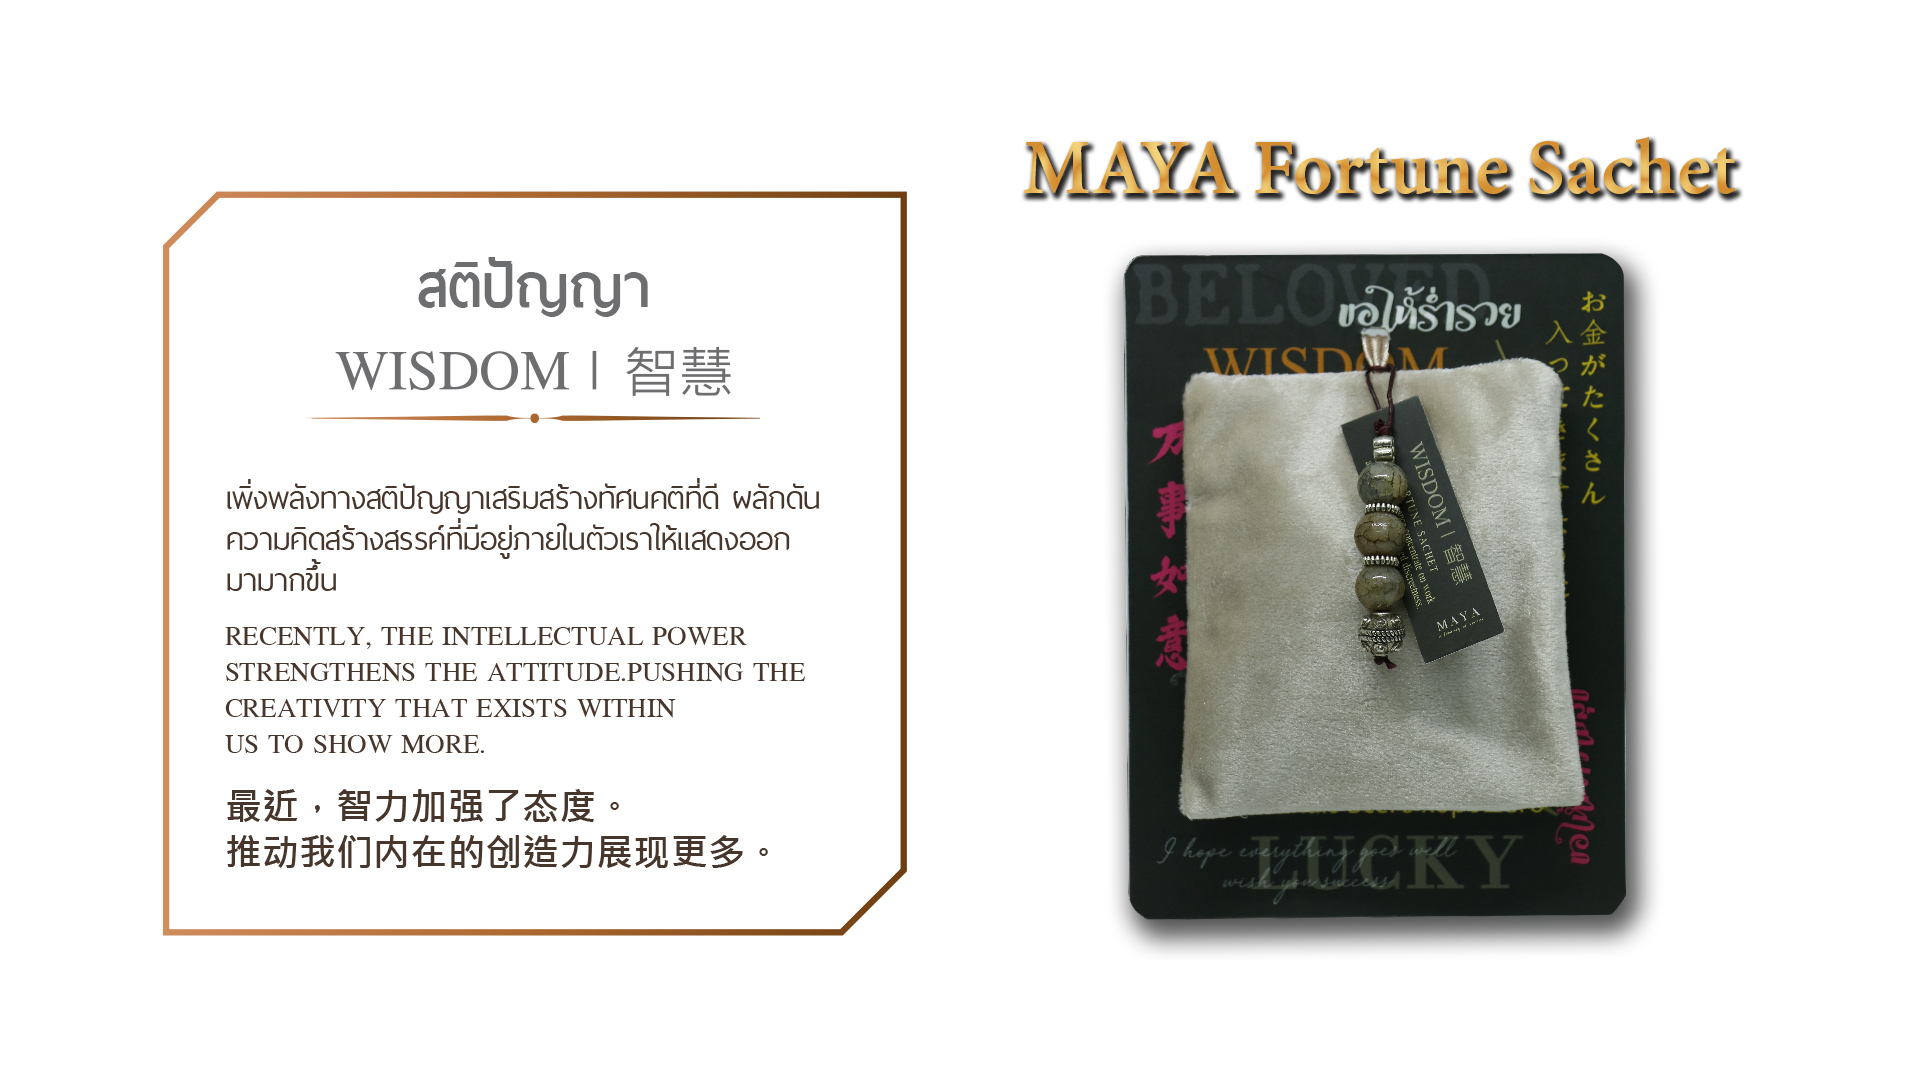 MAYA Fortune Sachet "WISDOM" (Thai Spa)